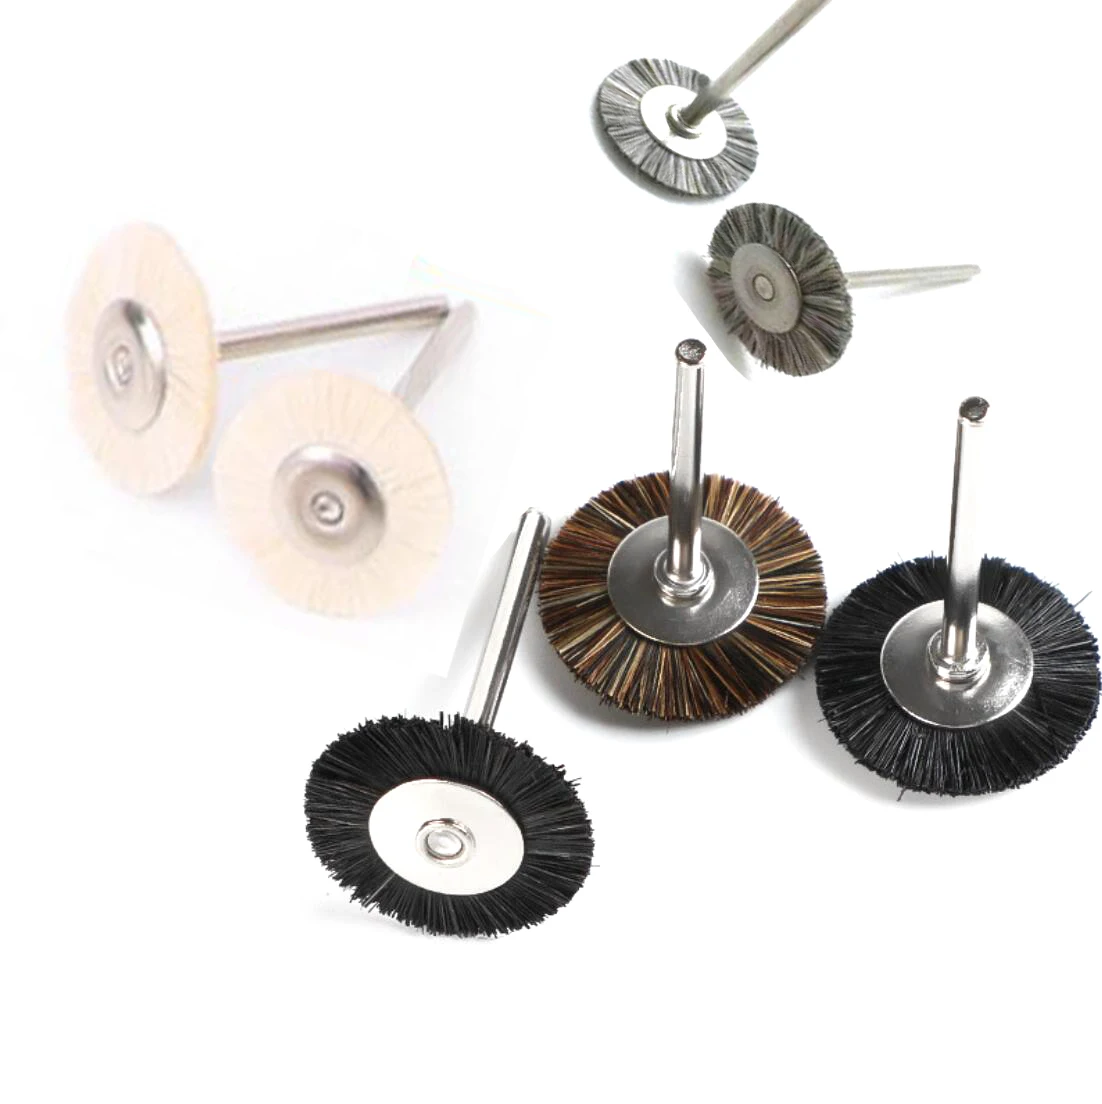 

144pcs 19mm 22mm 25mm Abrasive Brushes 2.35mm Shank Jewelry Polishing Wheel for Dremel Power Tool Accessories